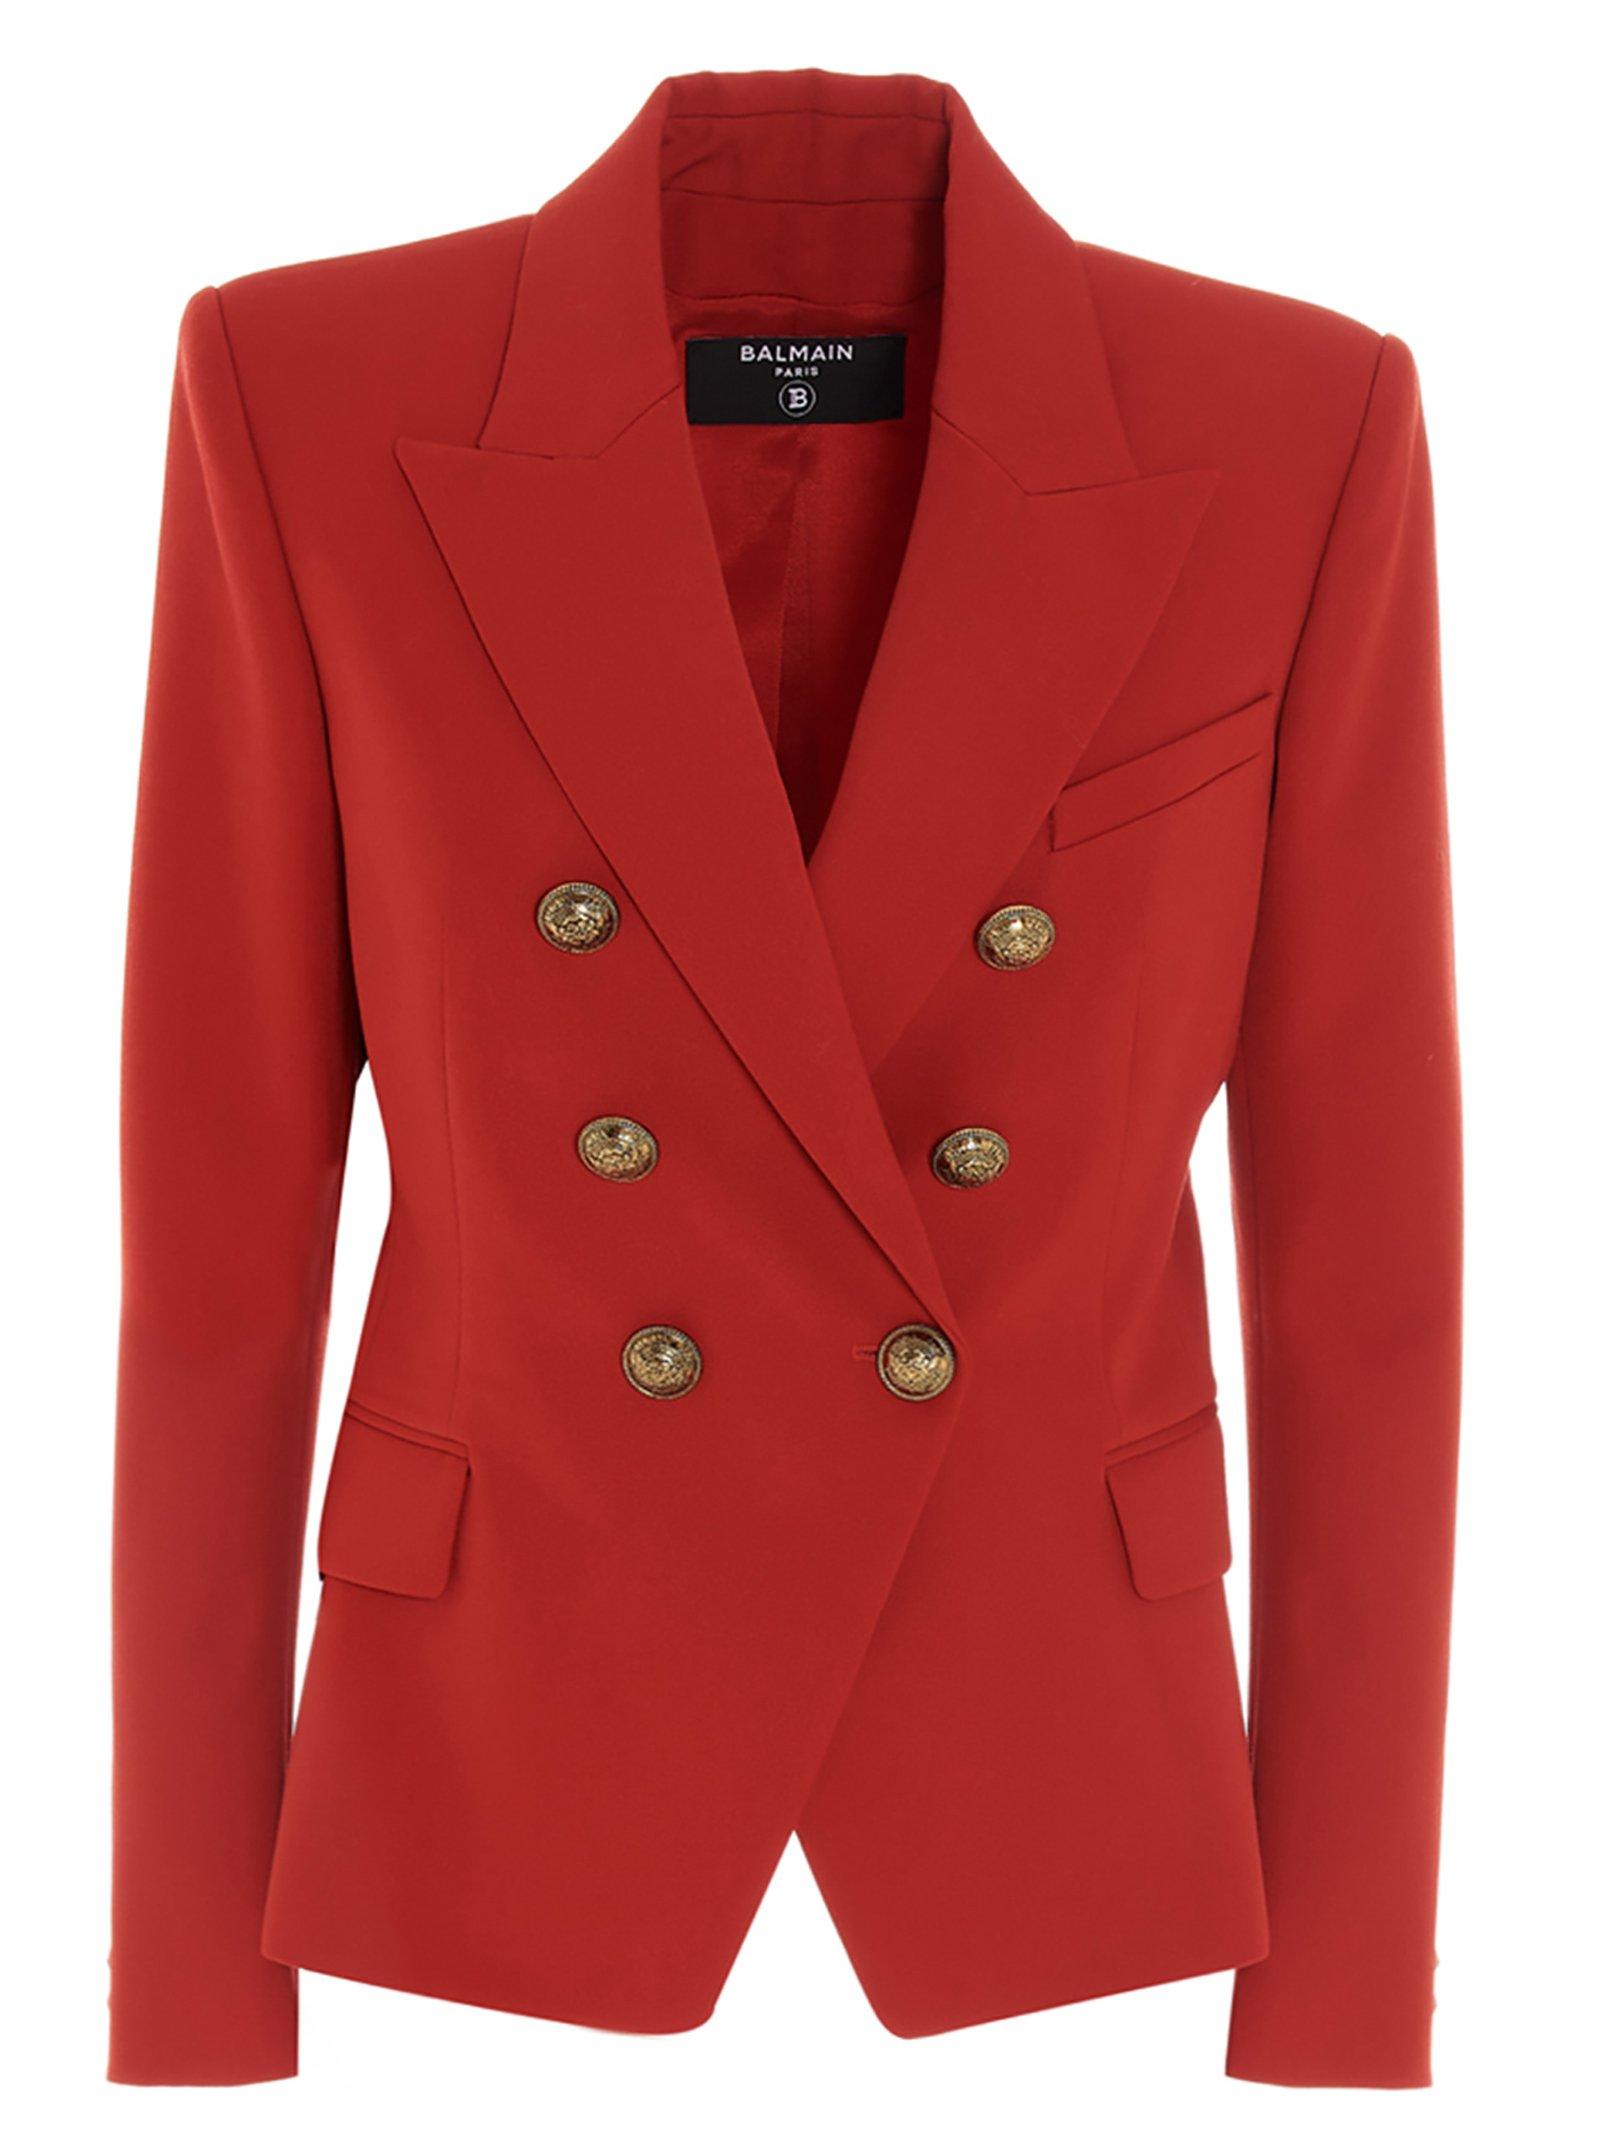 Balmain Wool Double Breasted Blazer in Red - Lyst